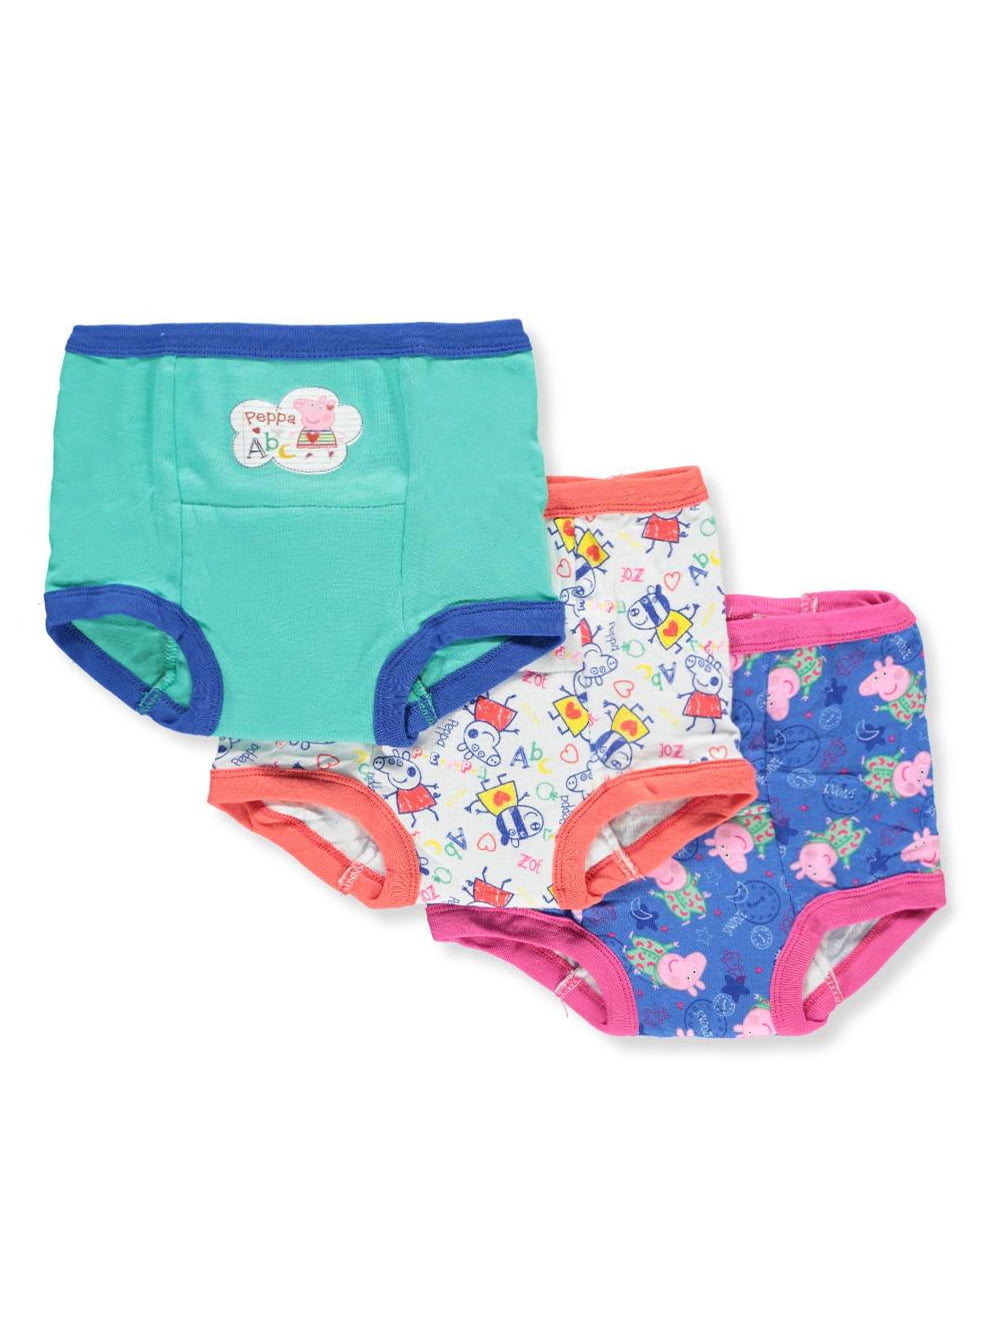 Peppa Pig Girls' 3-Pack Training Pants & Chart Set - mint multi, 4t (Toddler)  